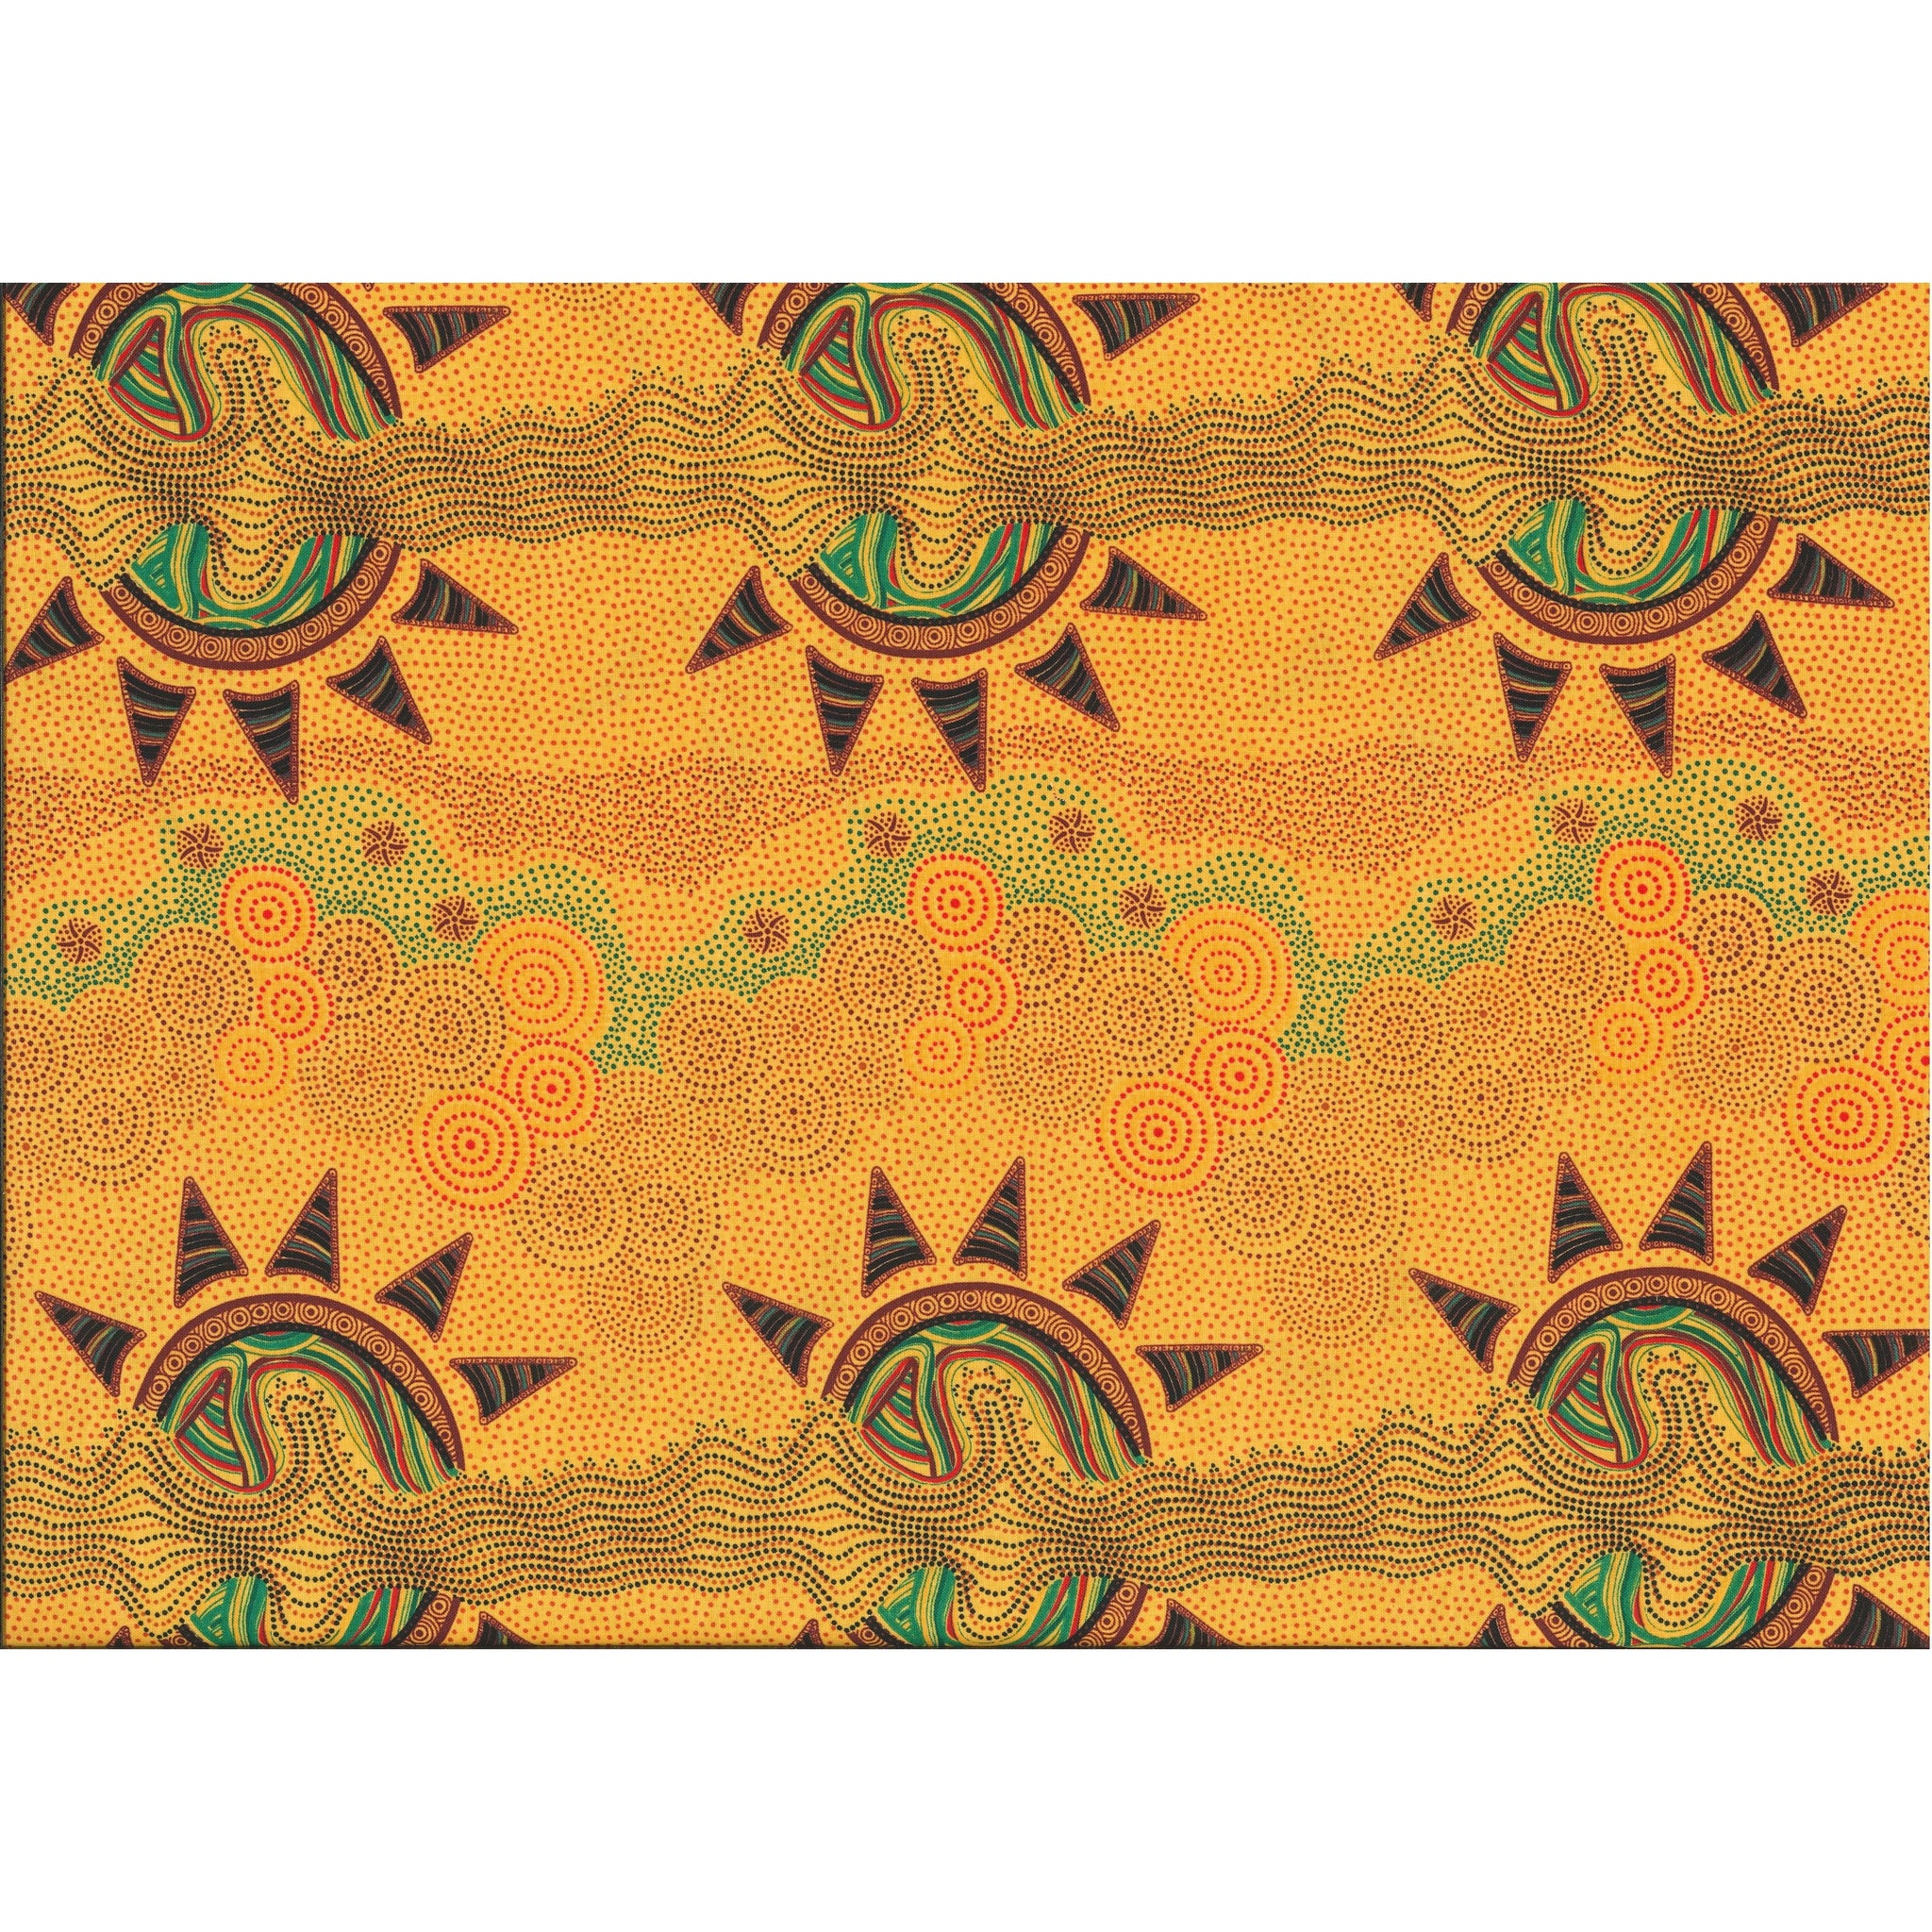 Sunset Night Dreaming yellow Australian Aboriginal Fabric by Heather Kennedy